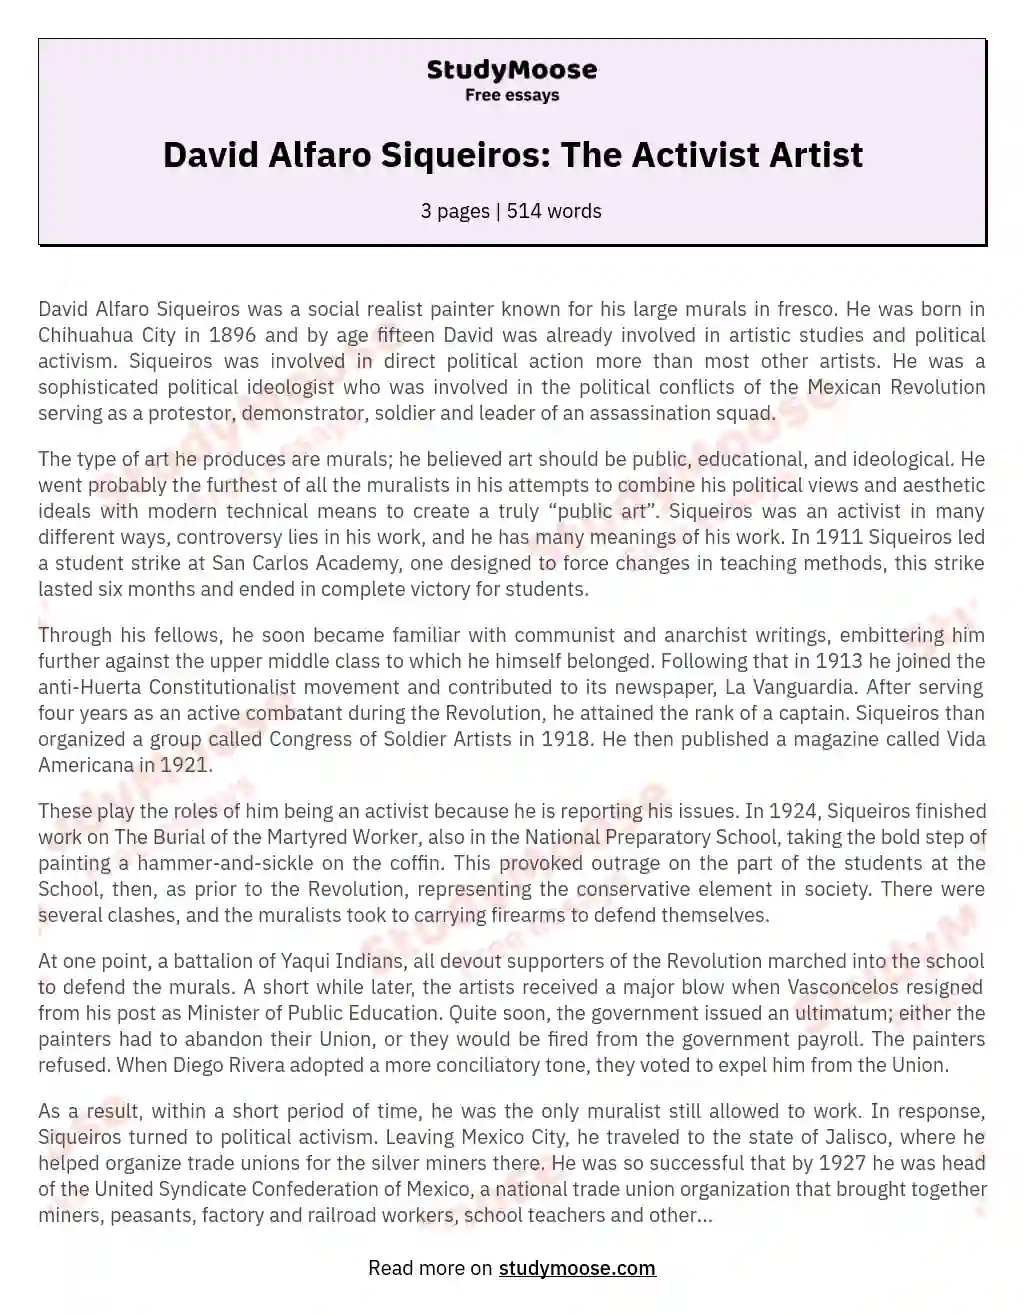 David Alfaro Siqueiros: The Activist Artist essay